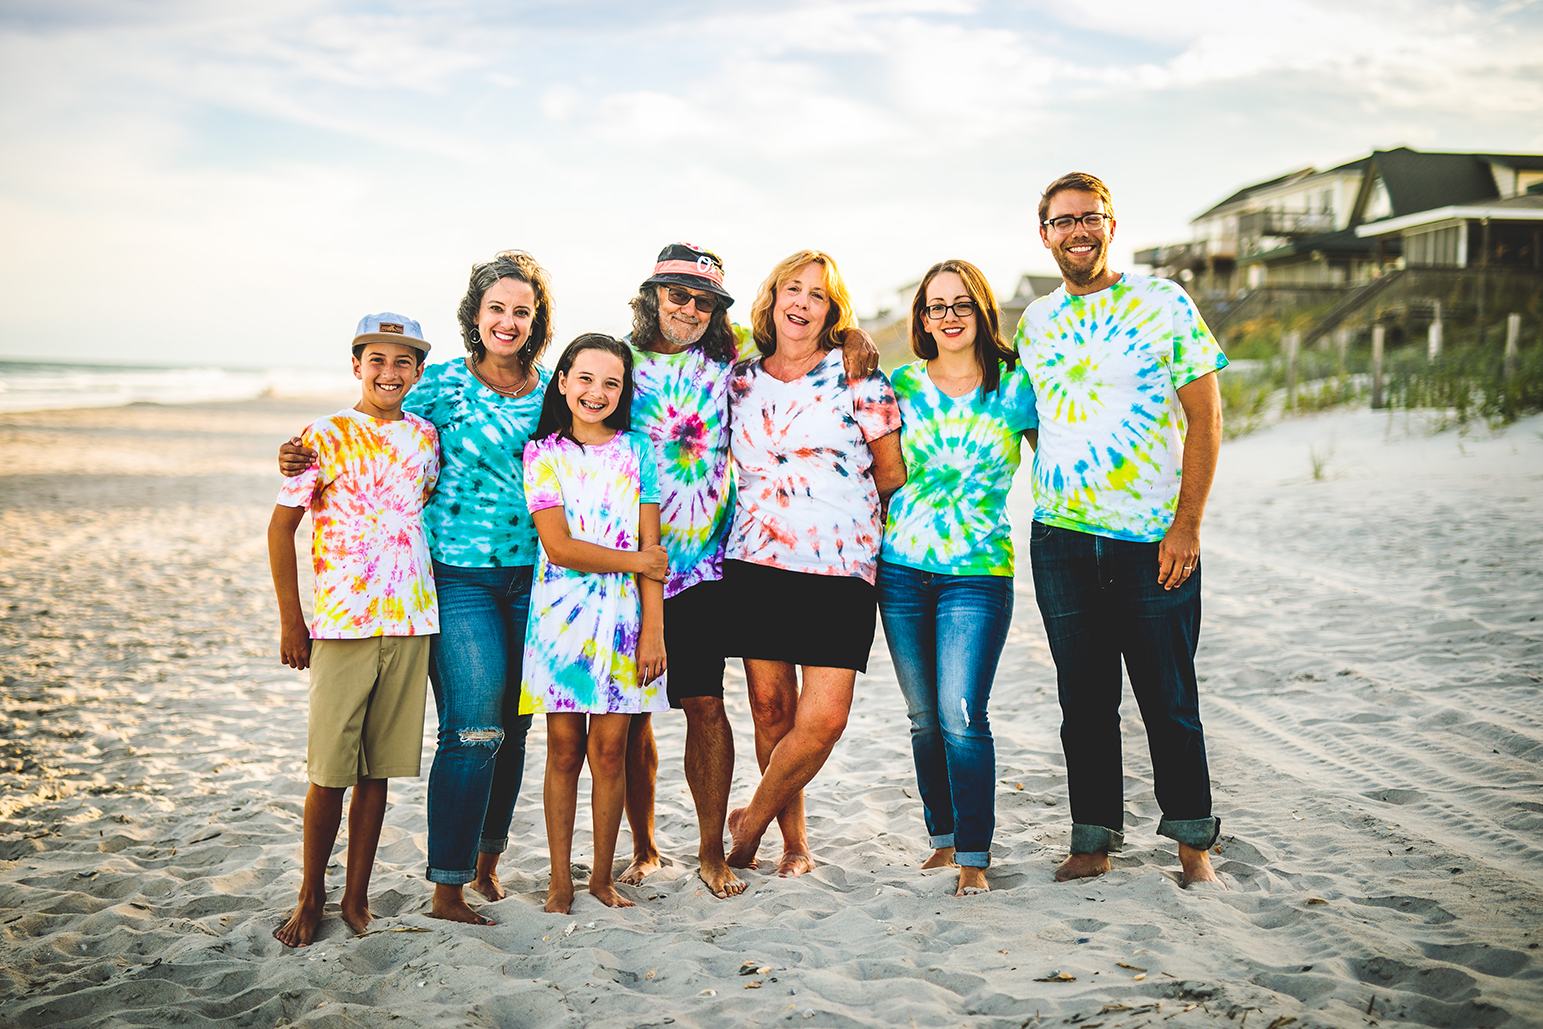 Family in Tie dye shirts.jpg